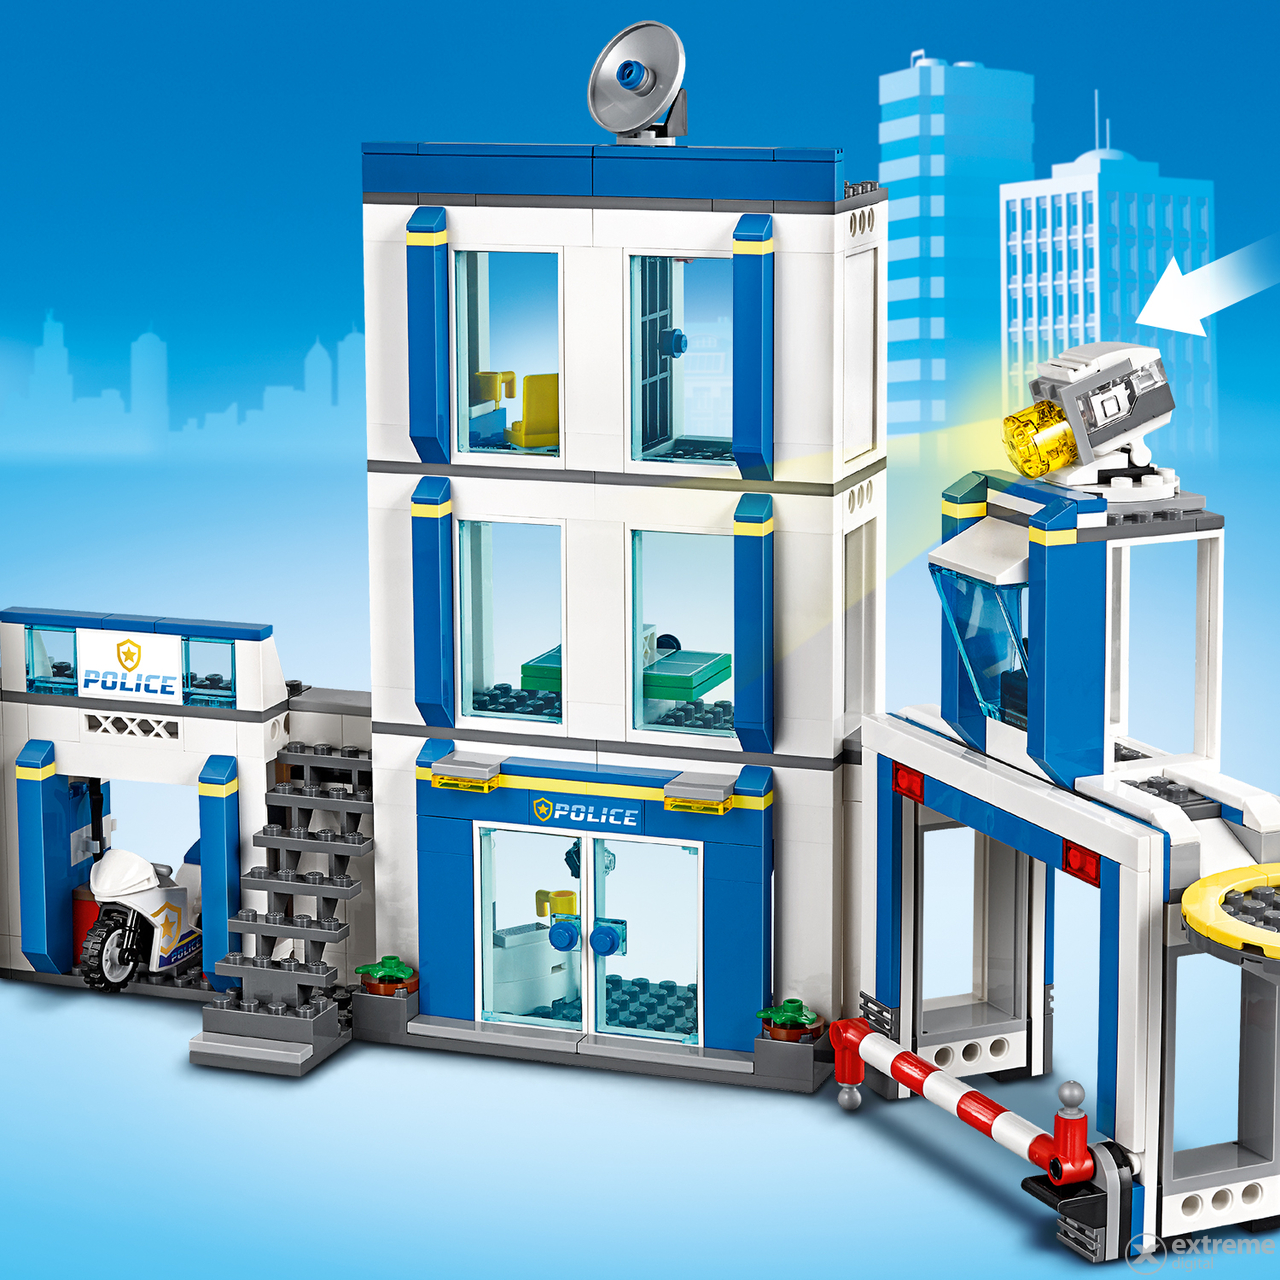 LEGO® City Police 60246